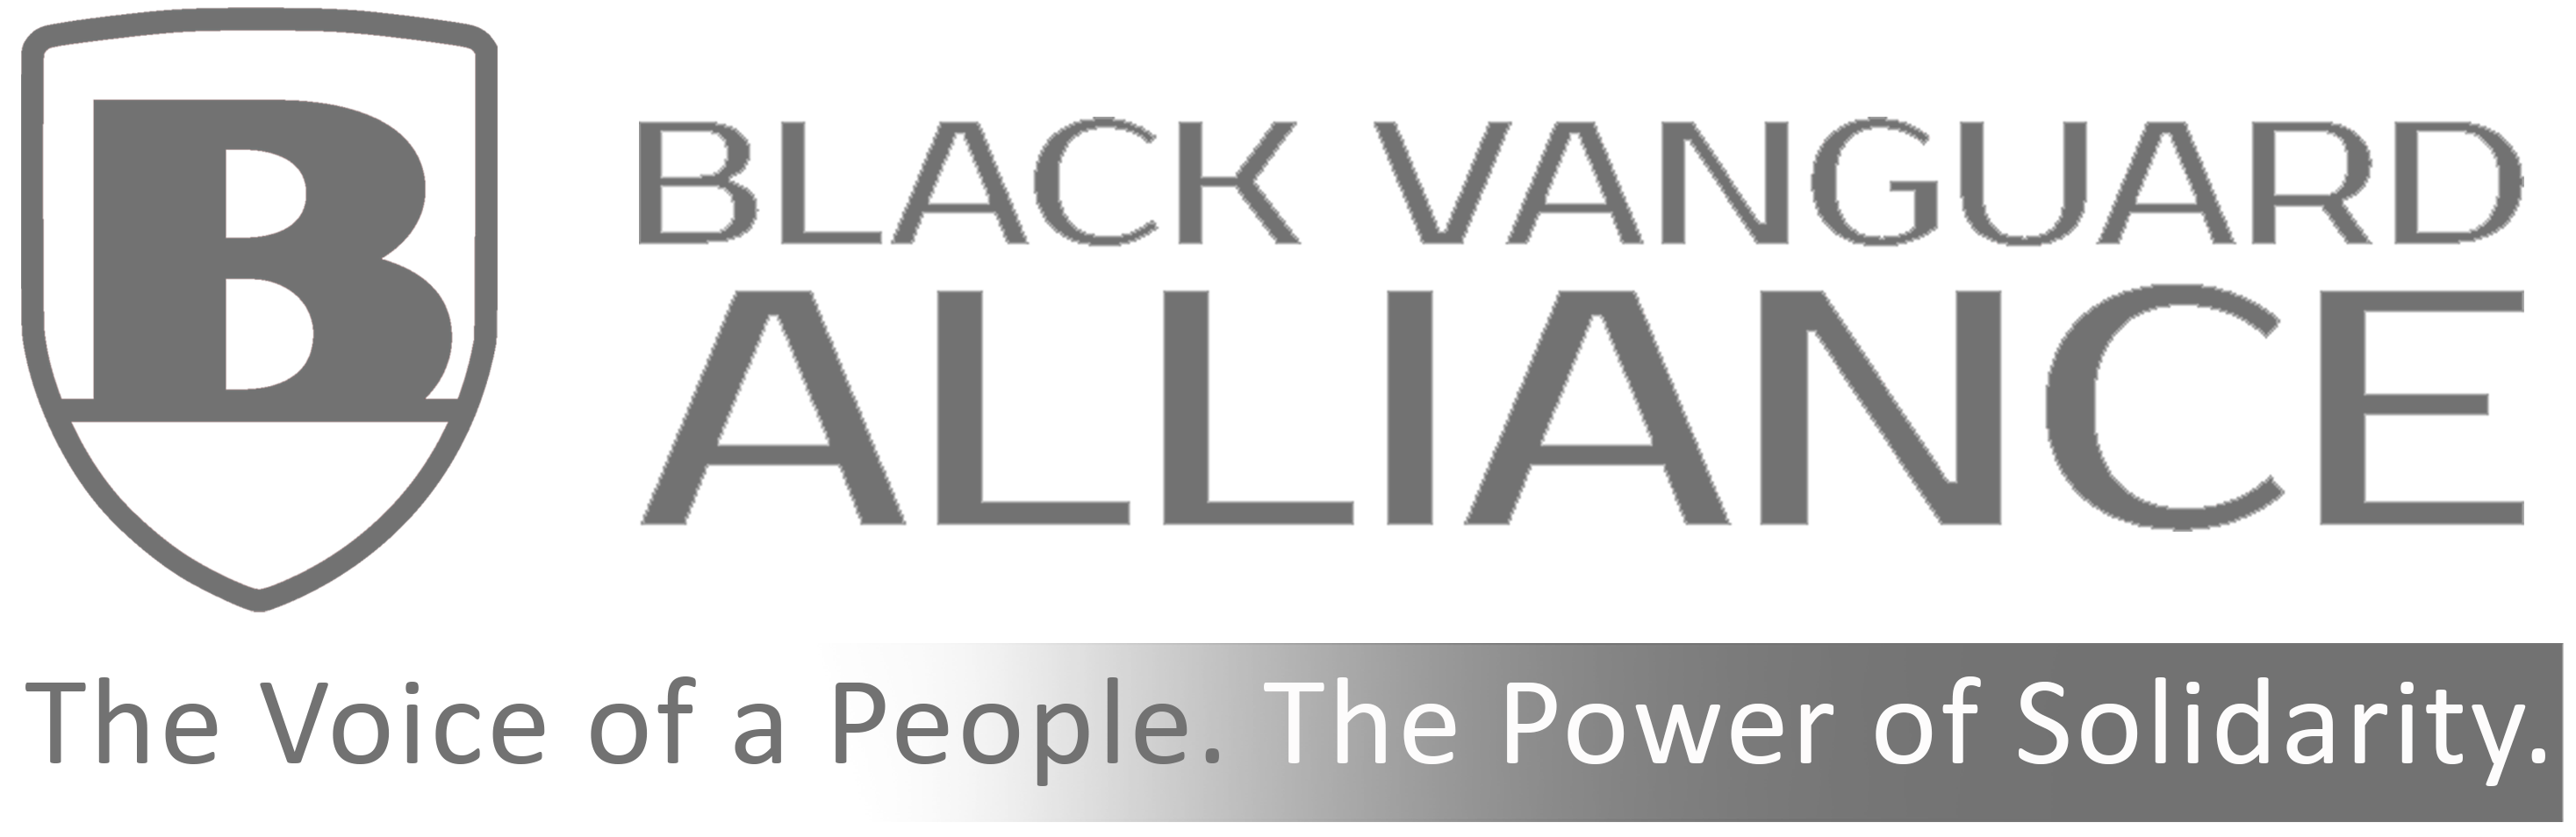 Black Vanguard Alliance